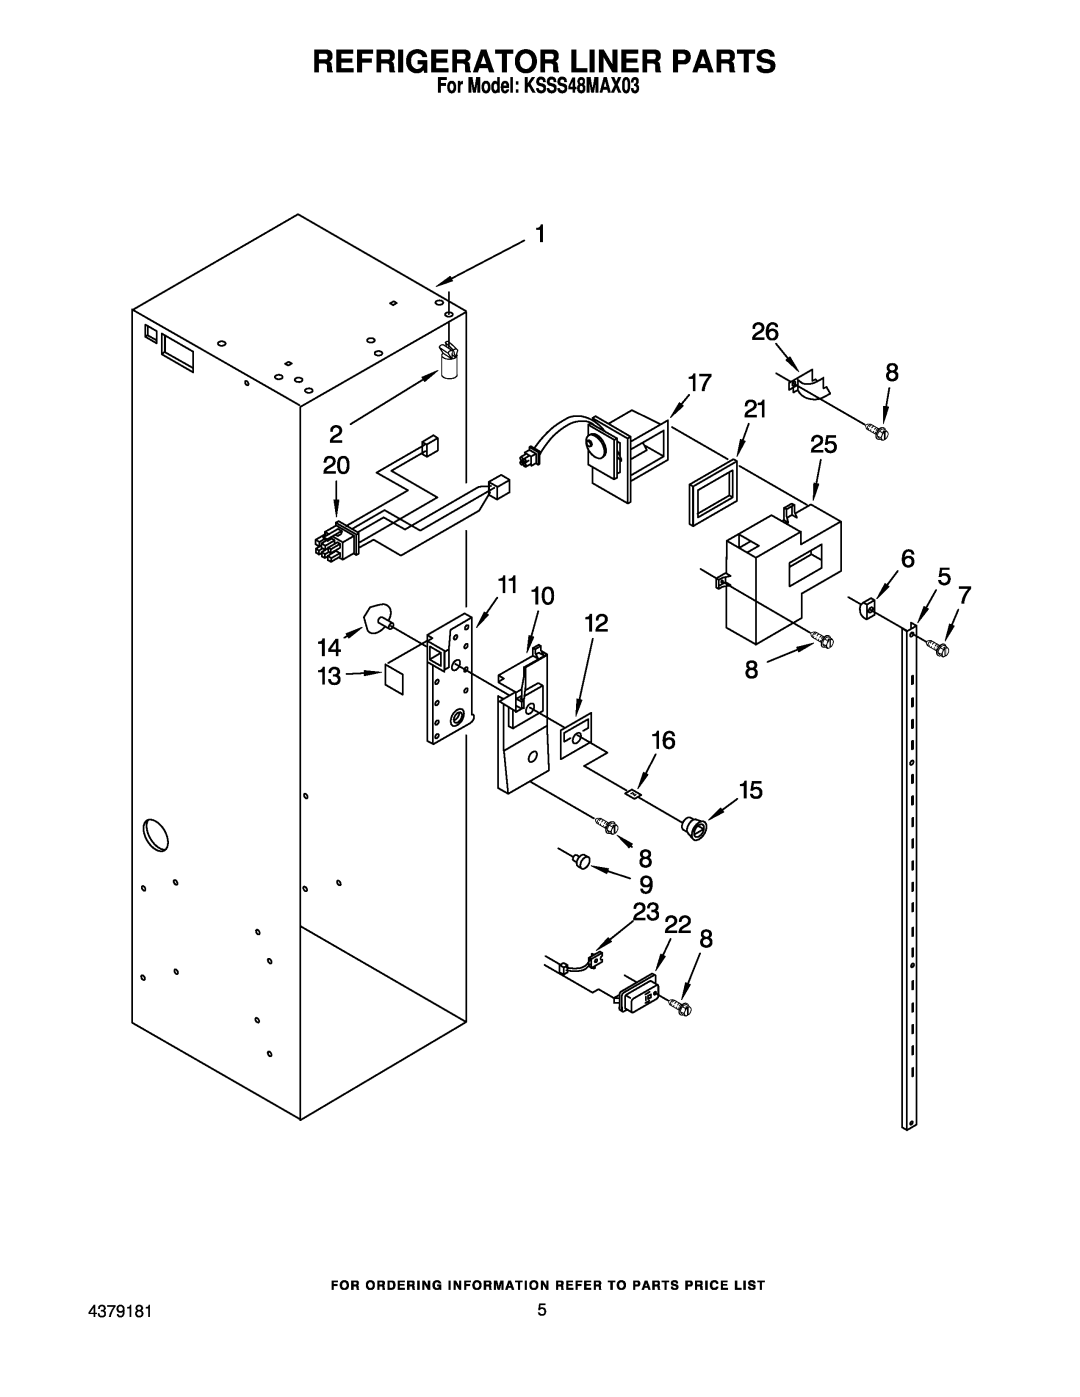 KitchenAid manual Refrigerator Liner Parts, For Model KSSS48MAX03 